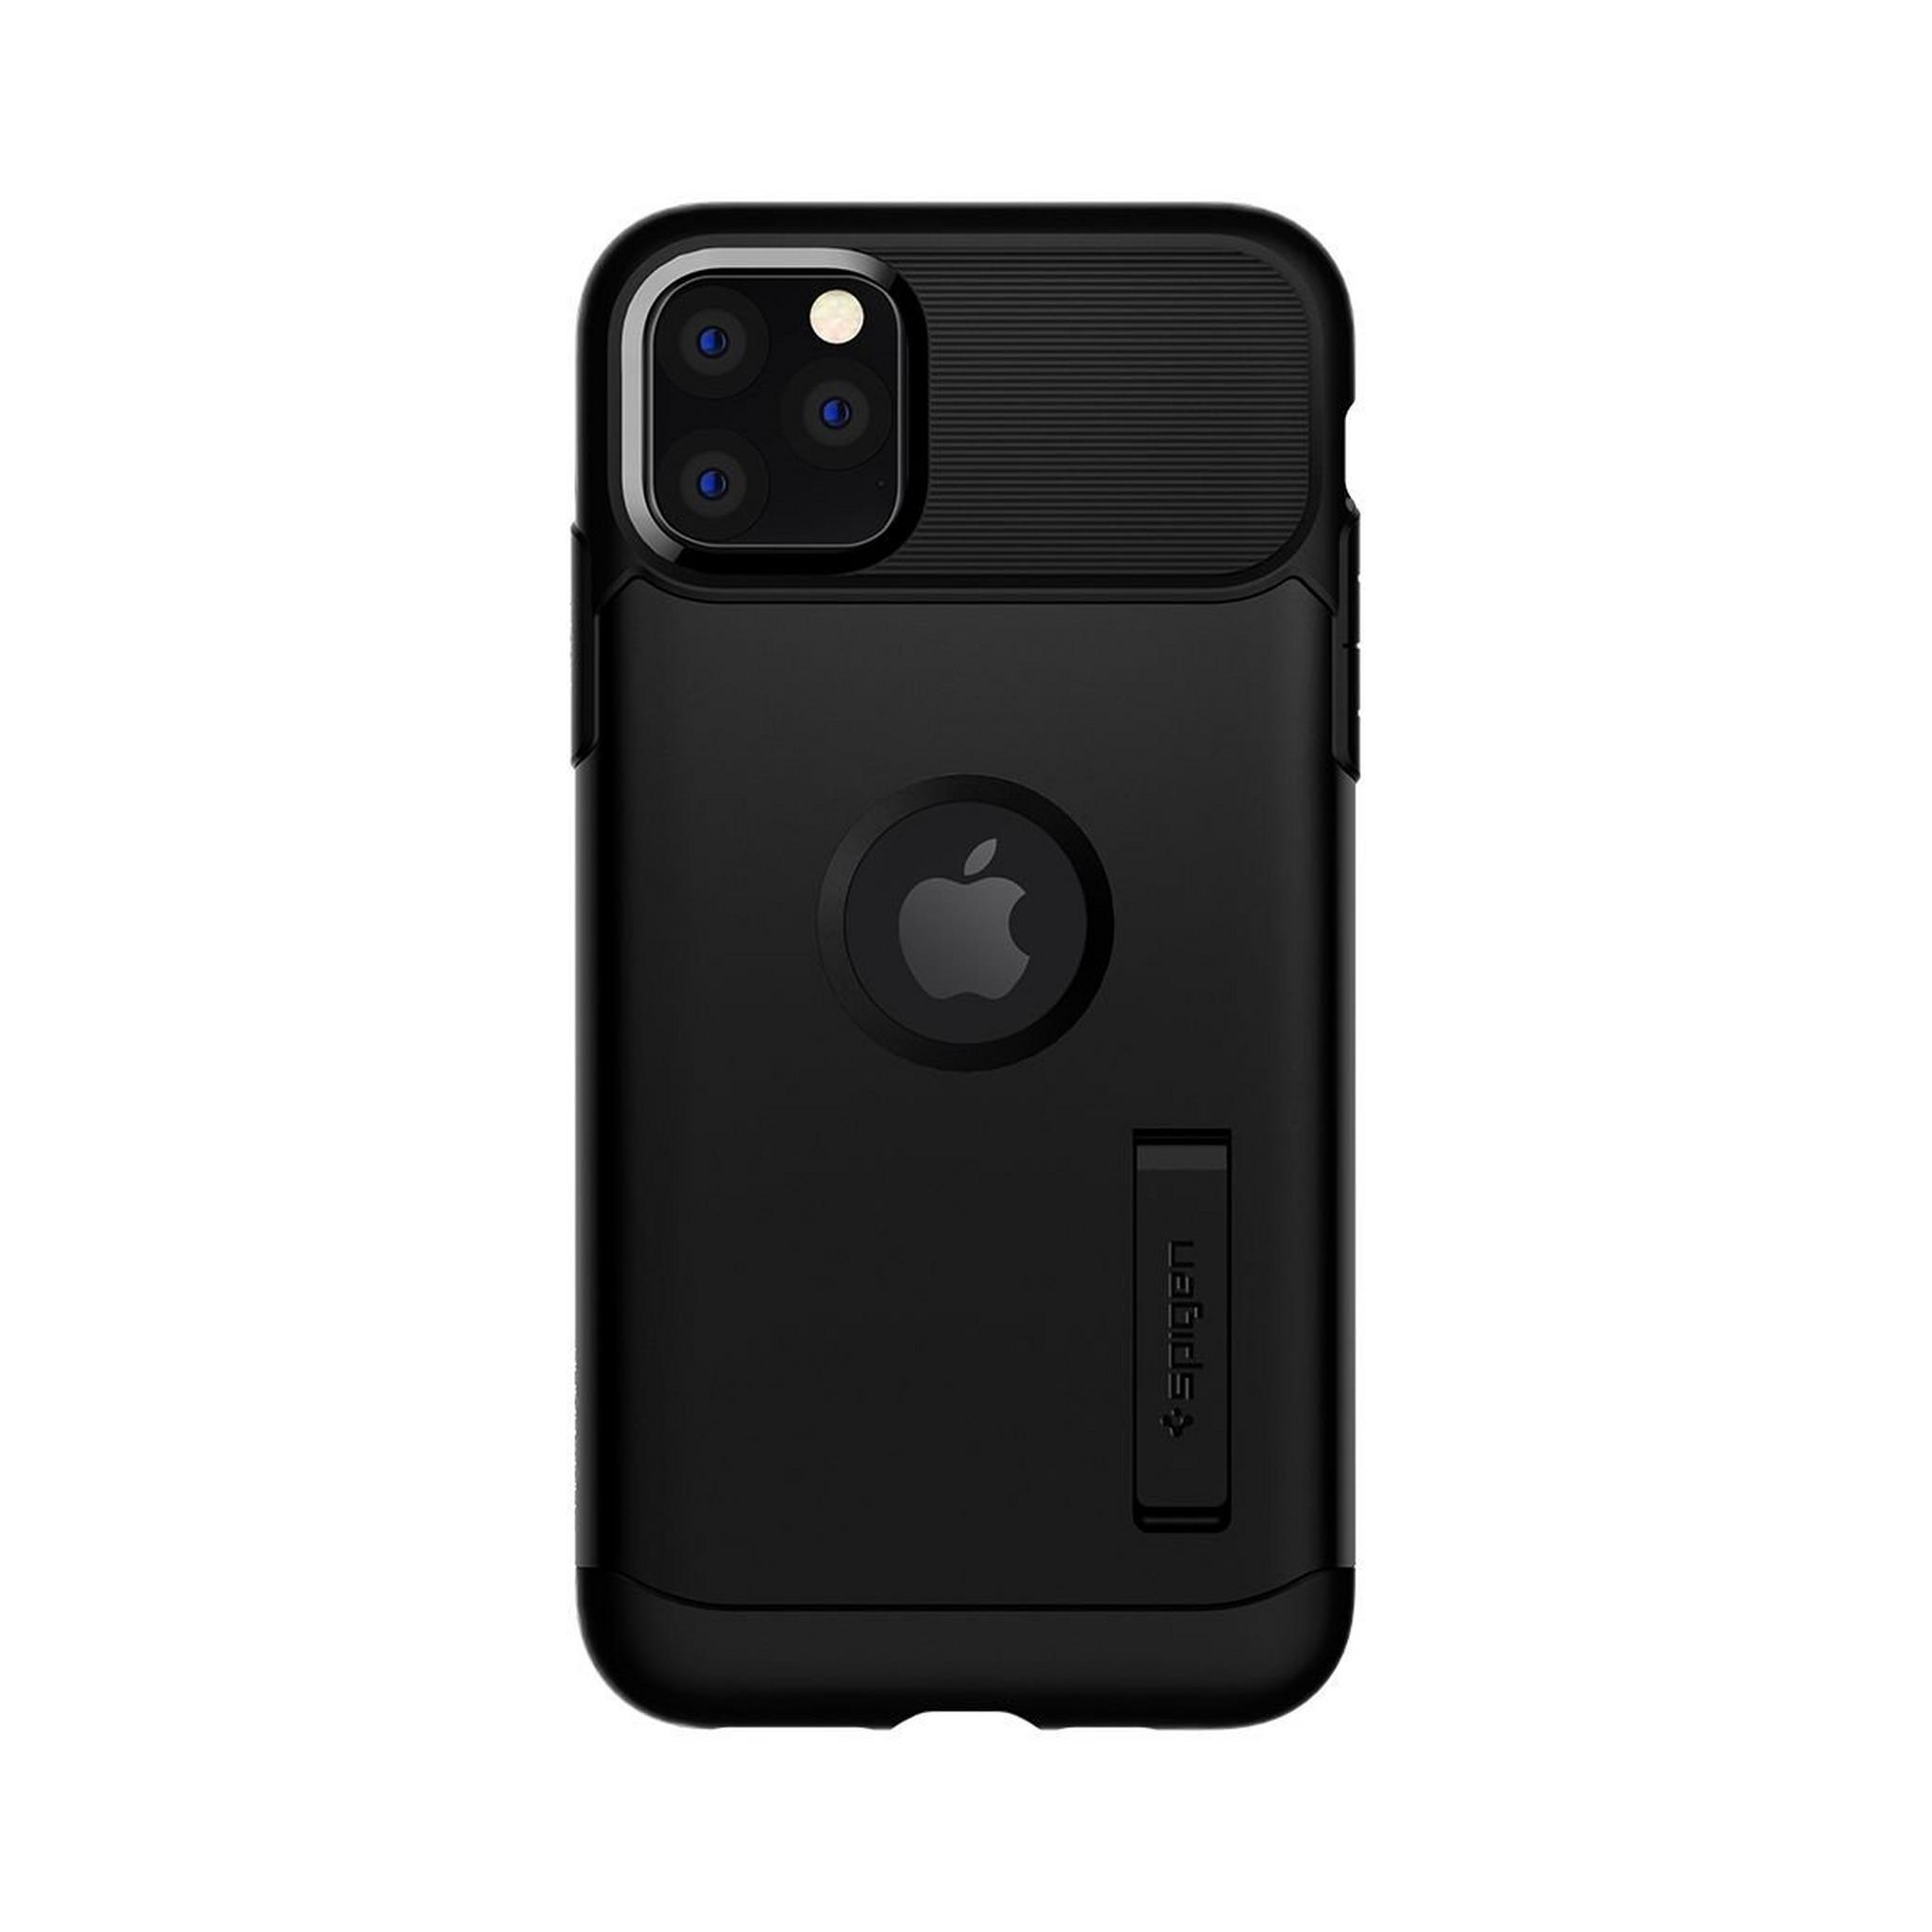 Spigen Slim Armor Case For iPhone 11 Pro (077CS27099) - Black